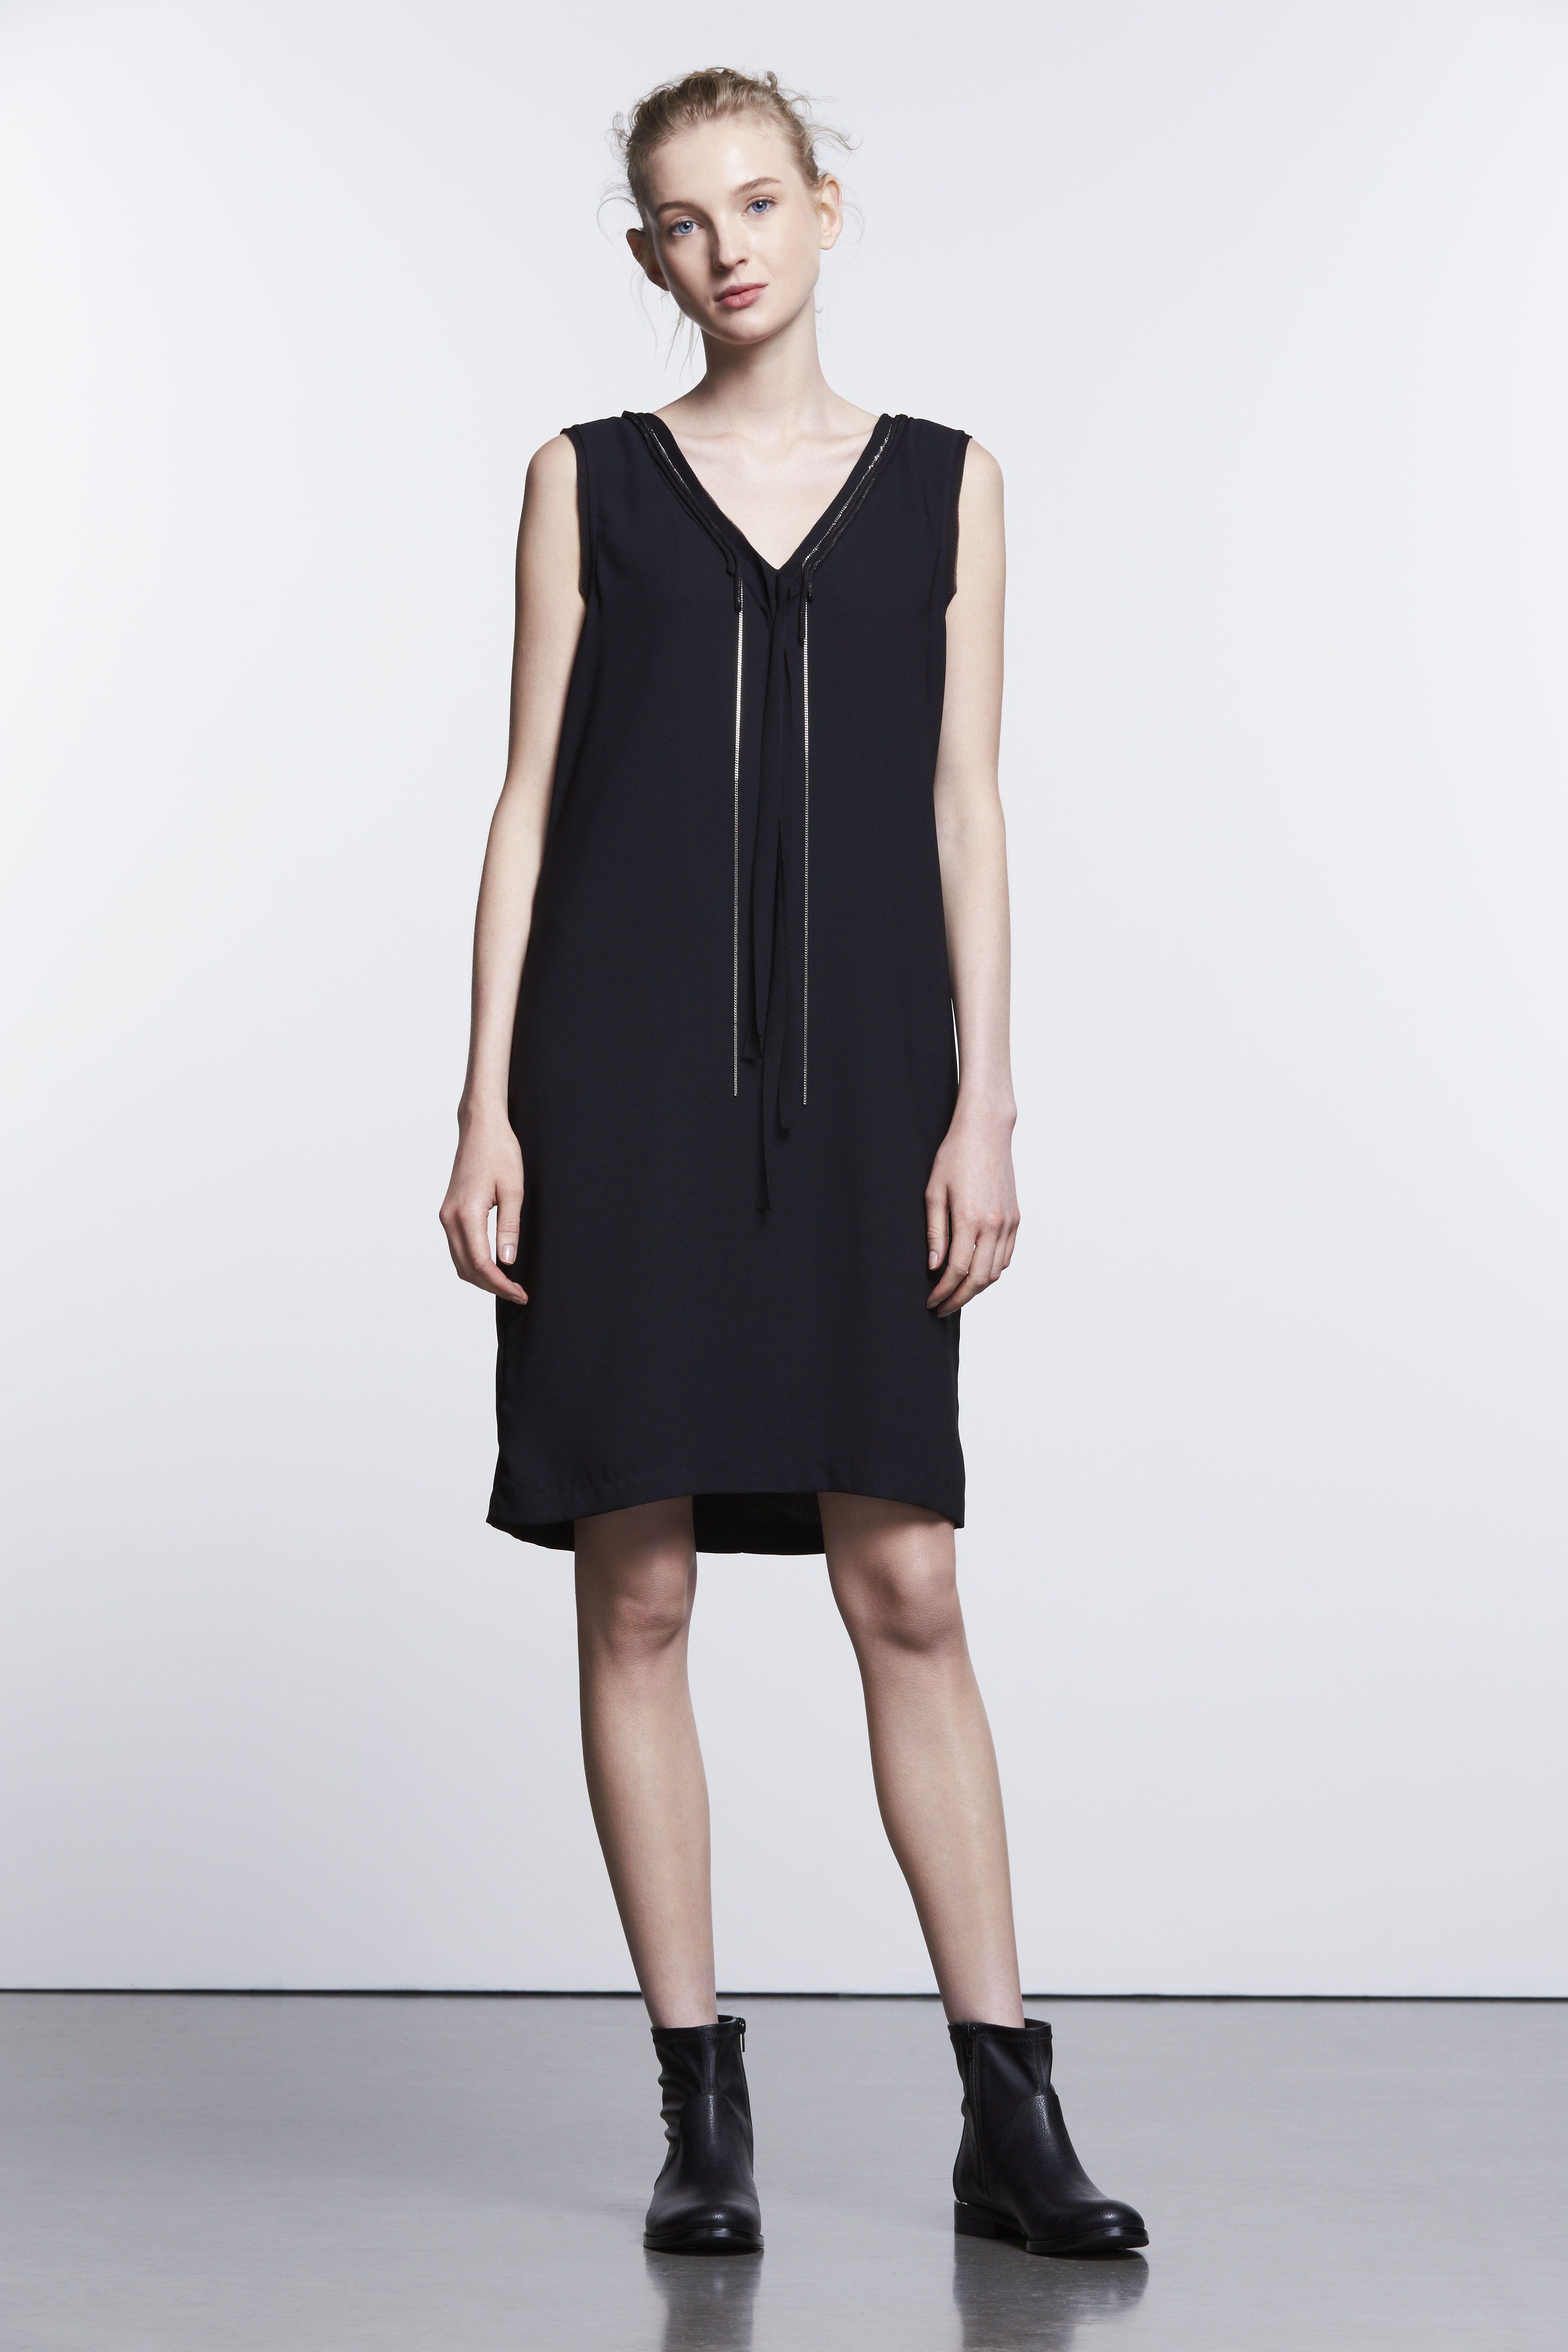 Vera Wang Launches Simply Noir Under-$100 Black Dresses - Simply